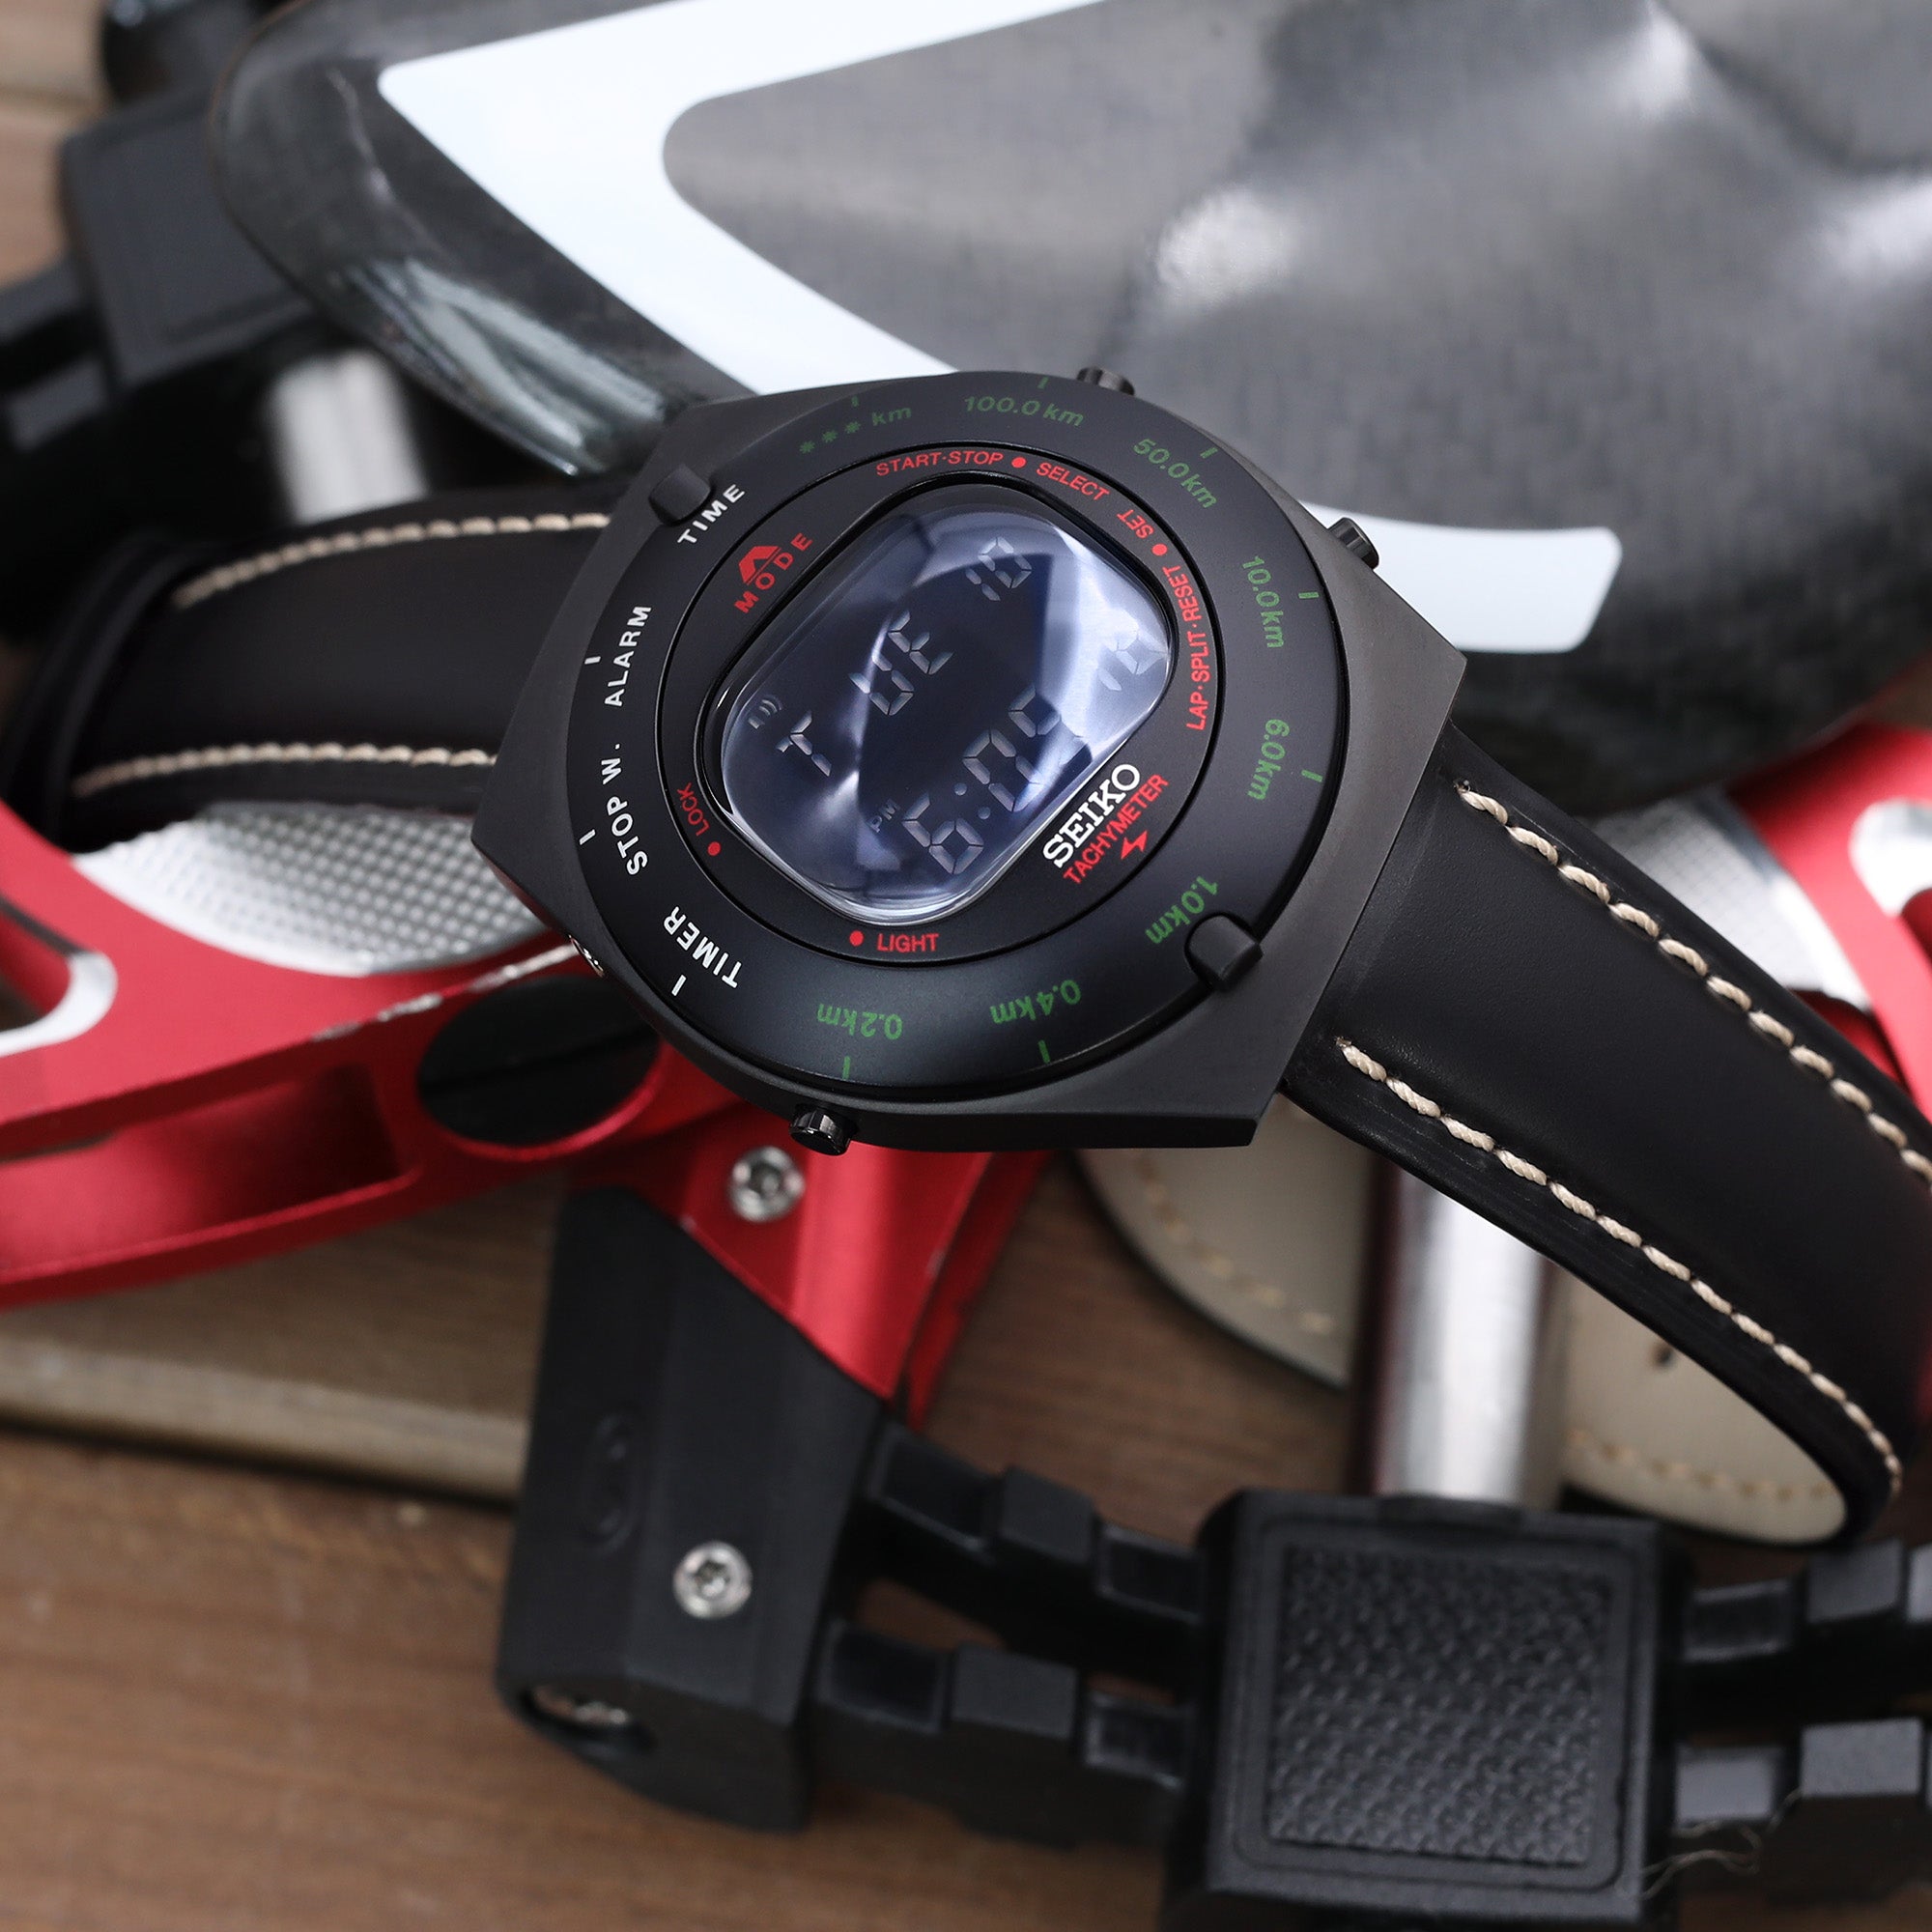 Seiko x Giugiaro Design Digital Driver Watch Estnation Limited Edition SBJG011 Strapcode Watch Bands